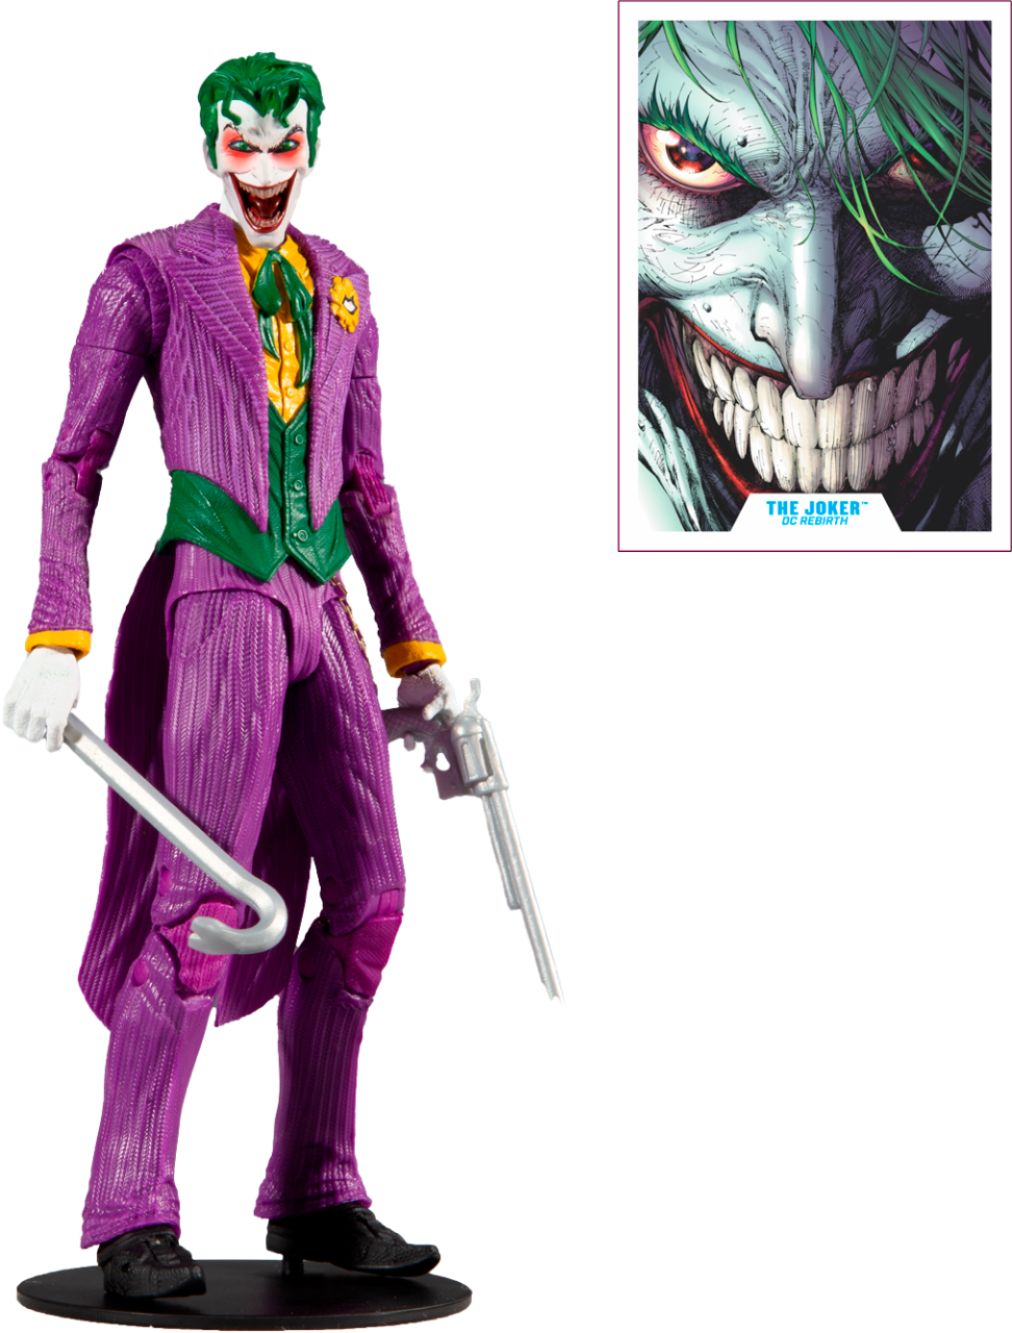 Amazon Prime Members: McFarlane DC Multiverse 7" Batman Death Metal Action Figure $12.99, The Joker $11.99 + Free Shipping